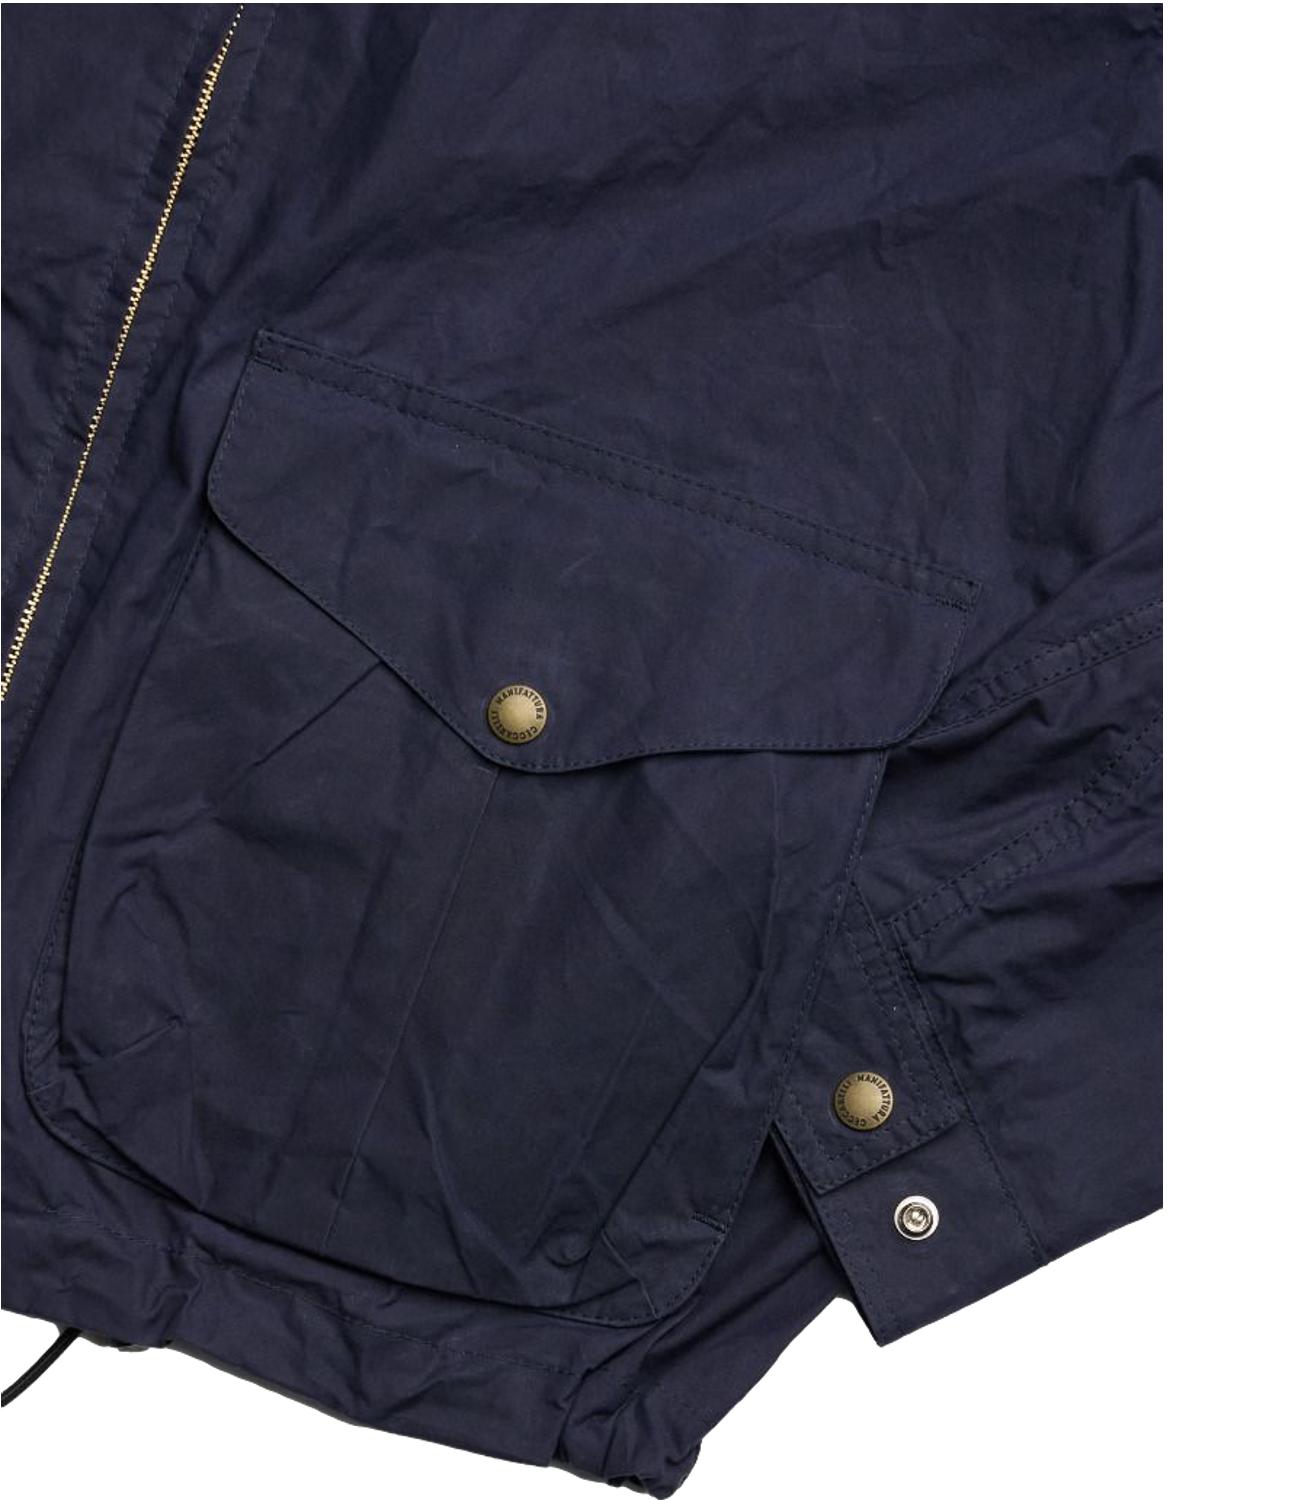 Manifattura Ceccarelli blazer coat with hood blue